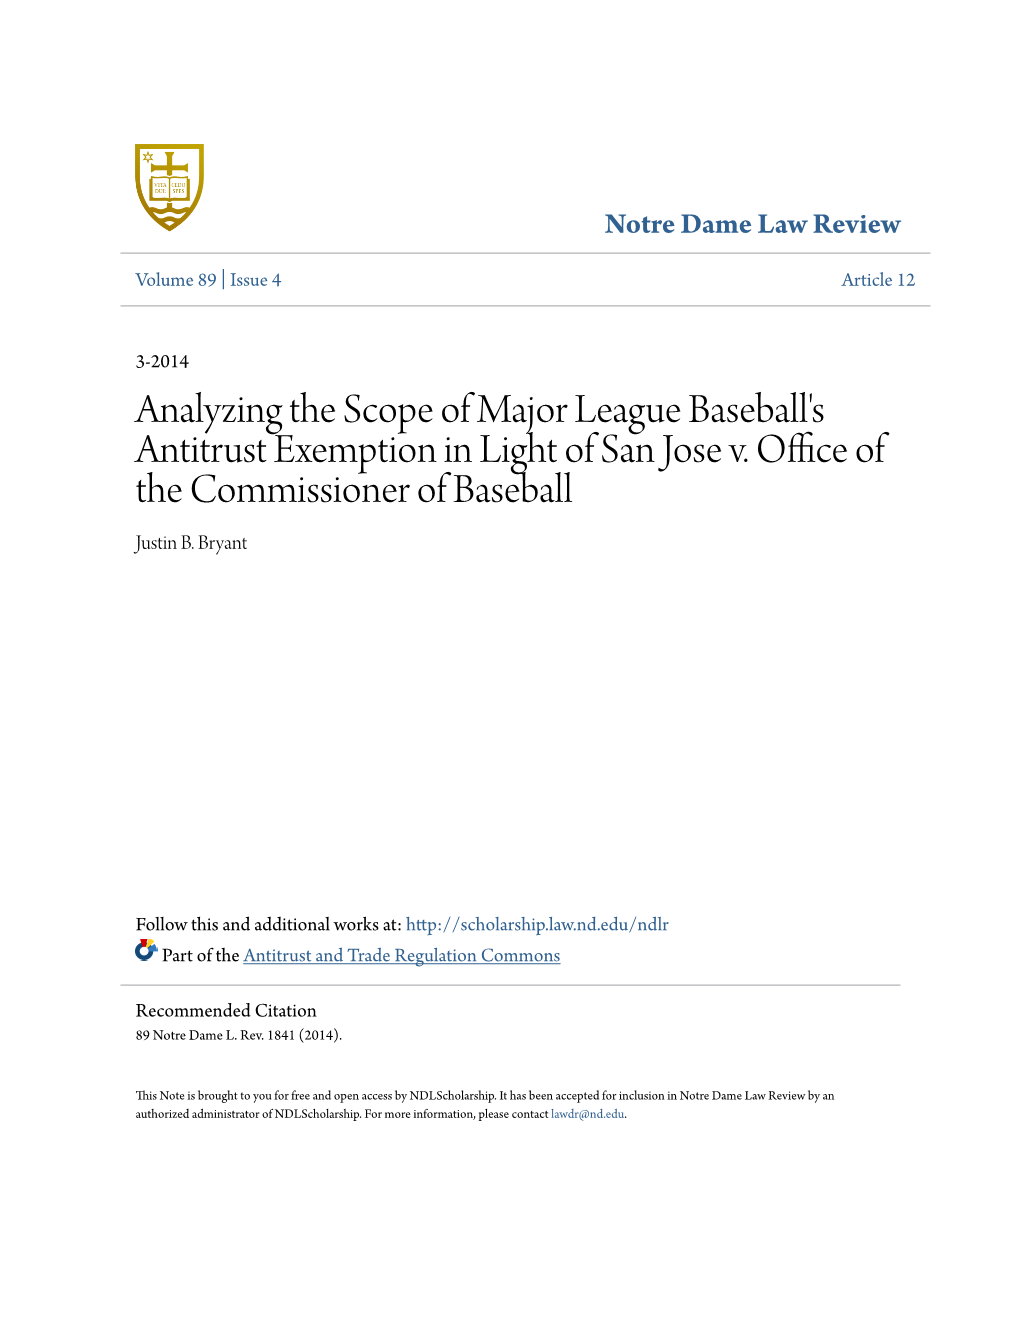 Analyzing the Scope of Major League Baseball's Antitrust Exemption in Light of San Jose V